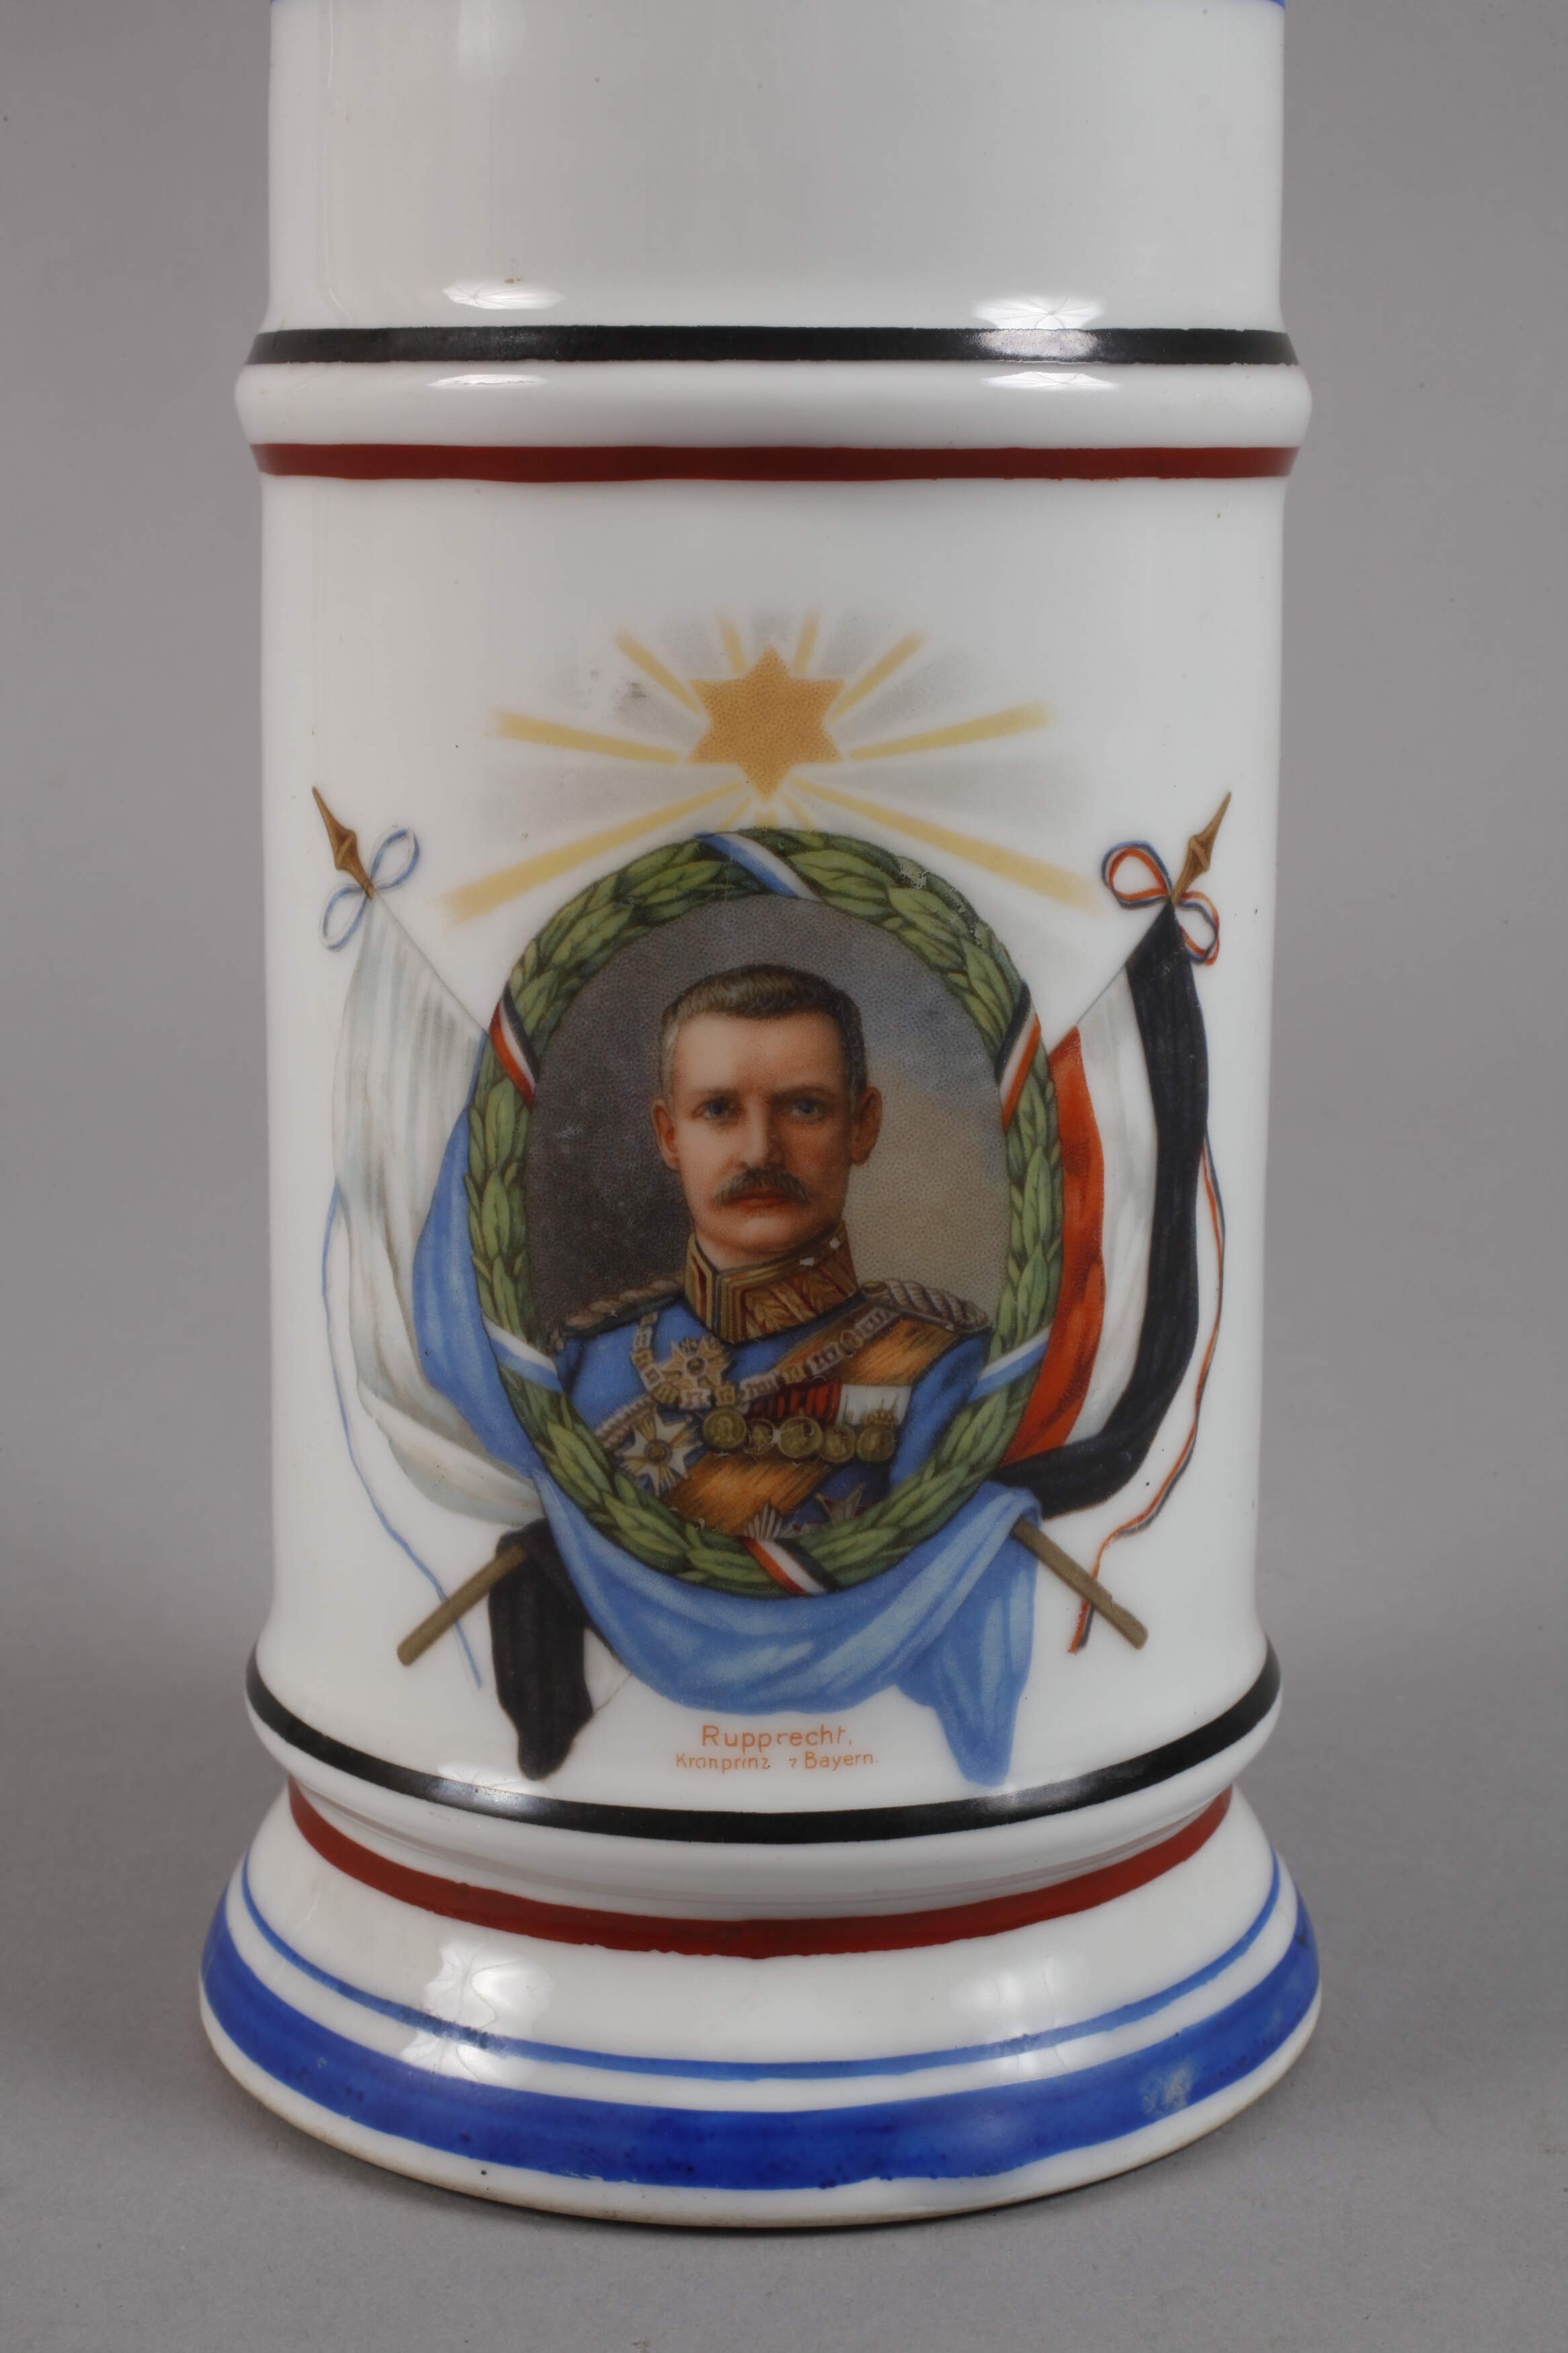 Commemorative jug Bavaria - Image 3 of 6